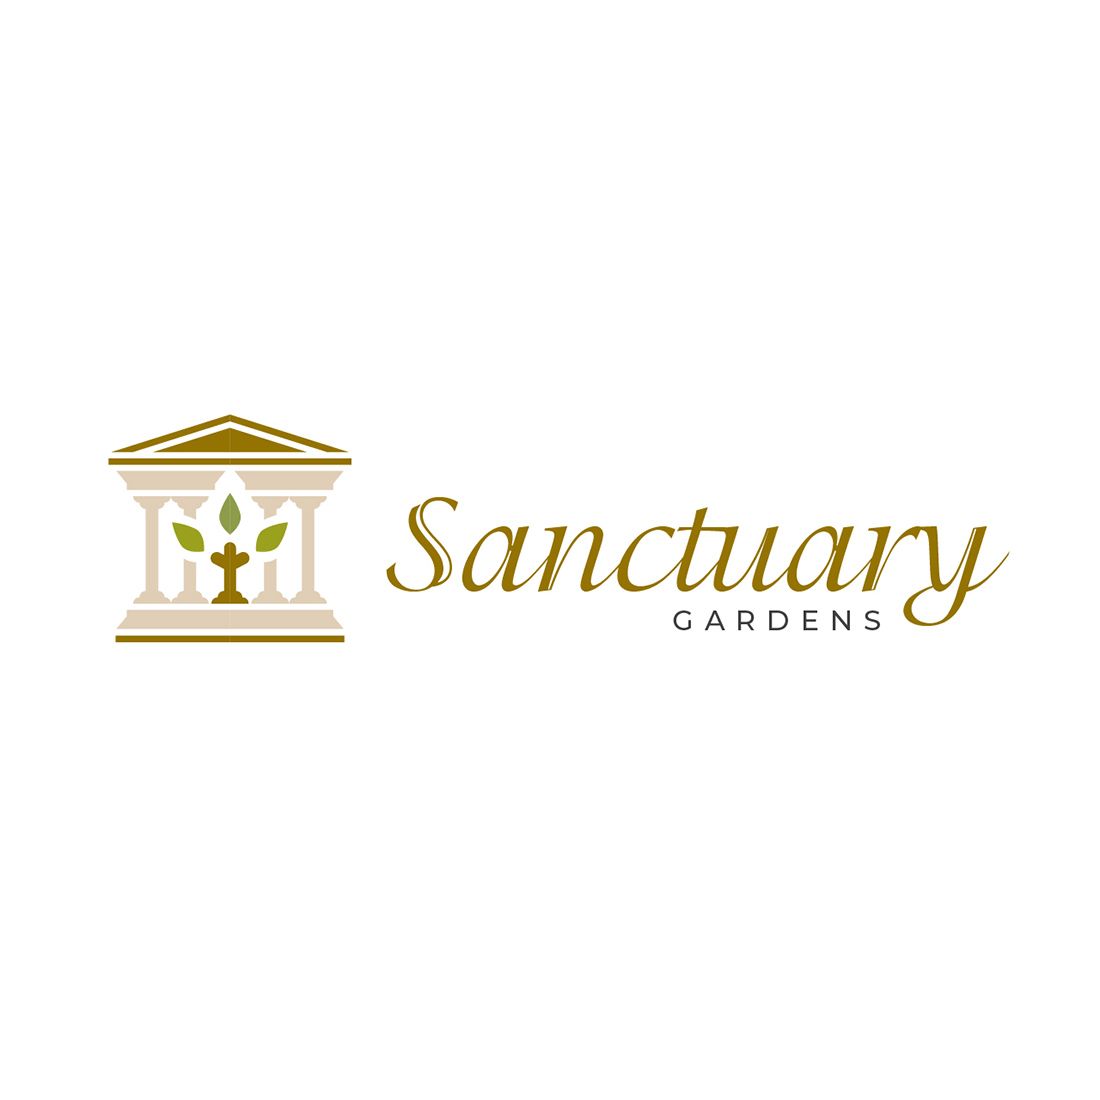 Sanctuary Gardens – Third Concept in light version colors.